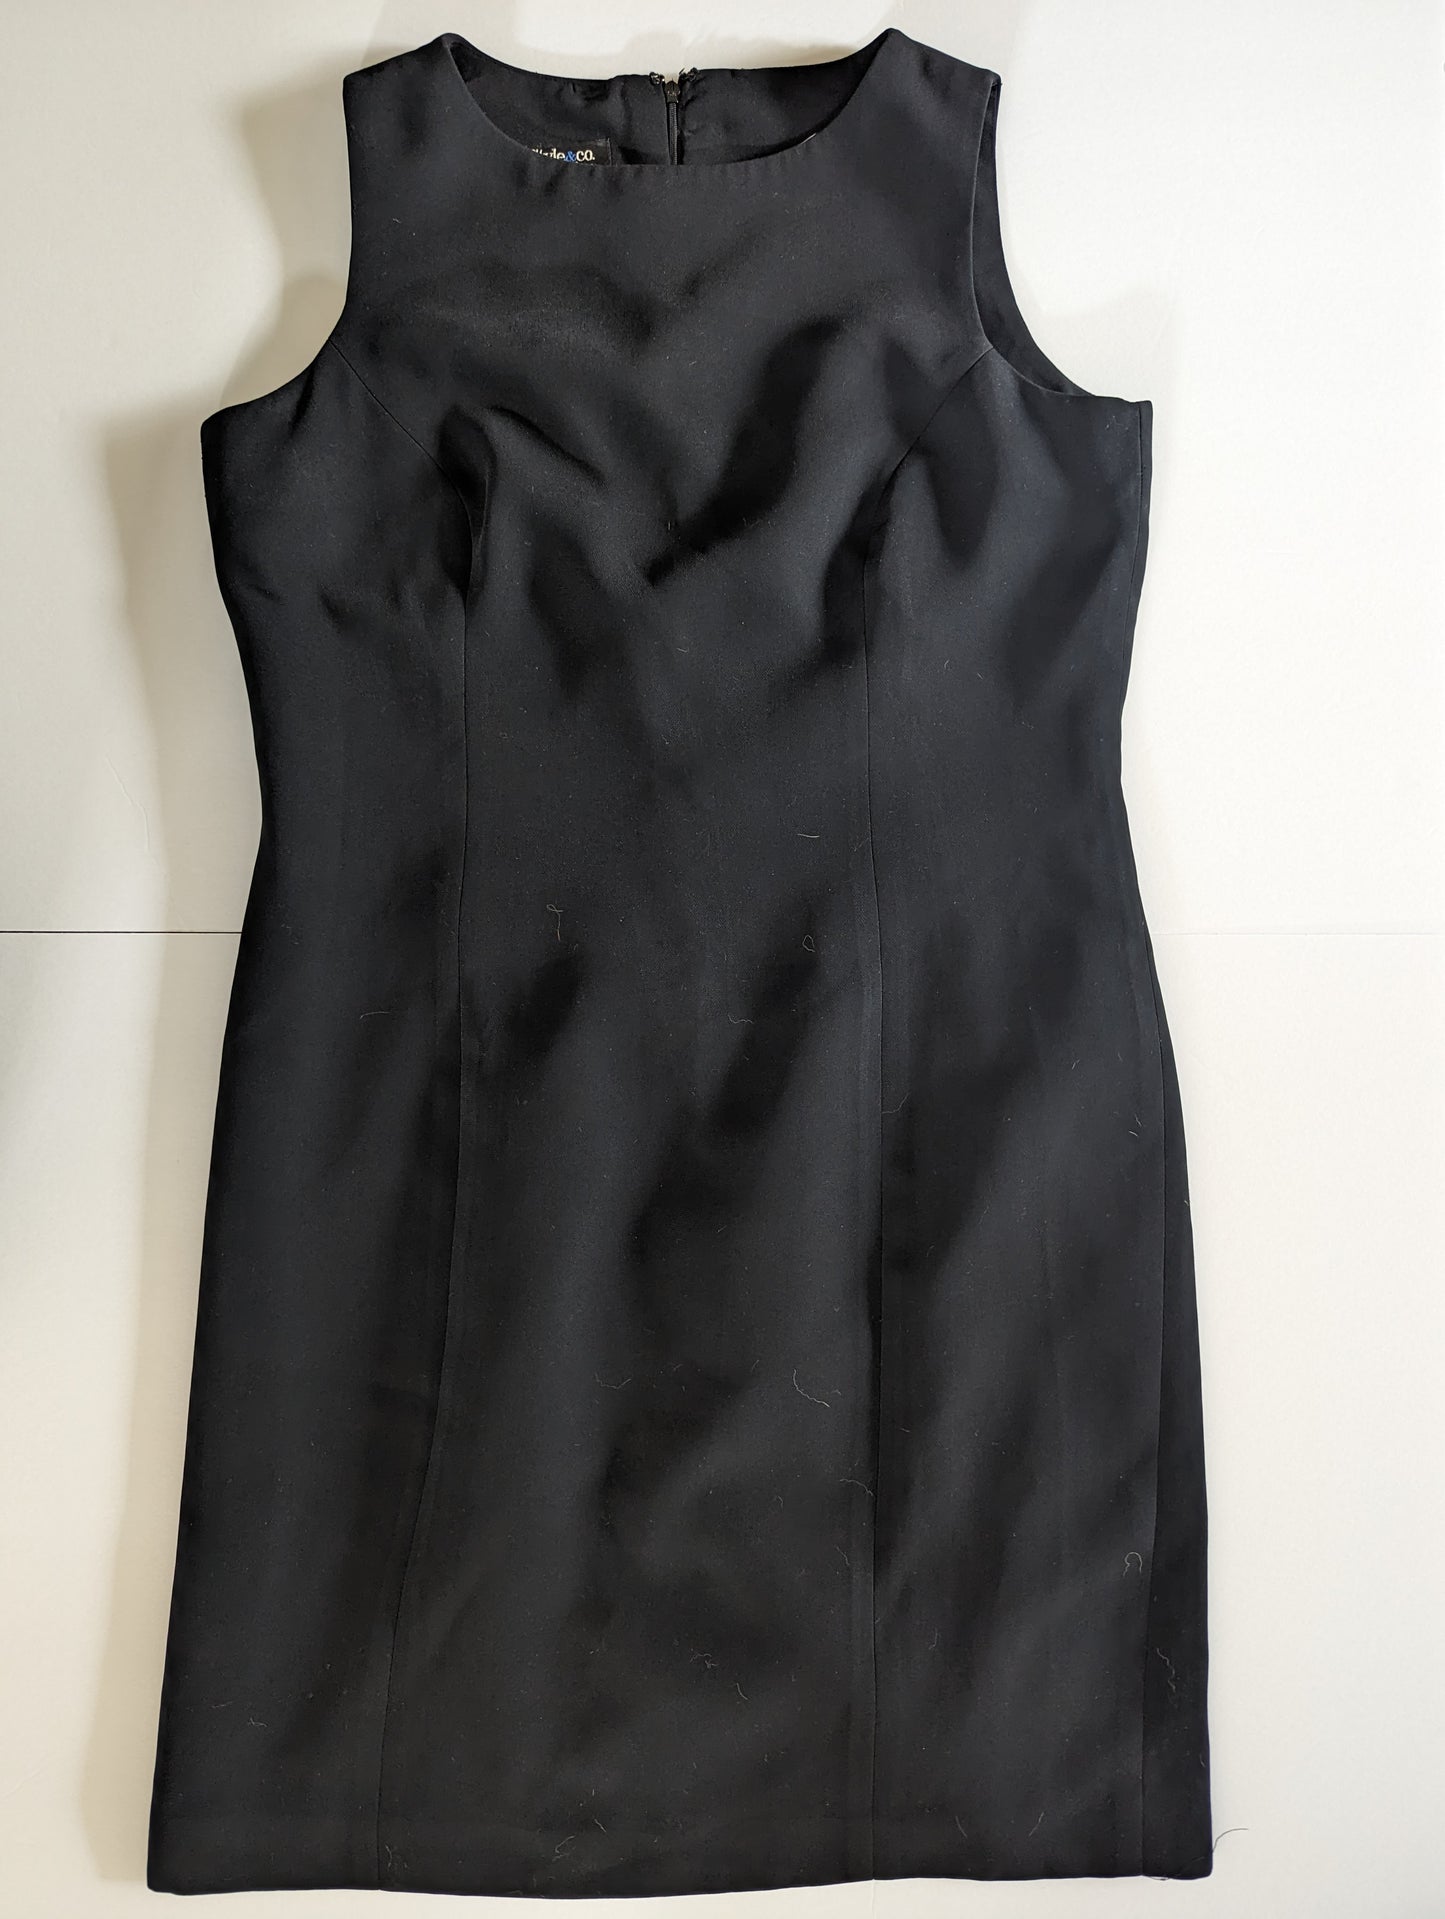 Style & CO. Collection Black dress, 12P, EUC